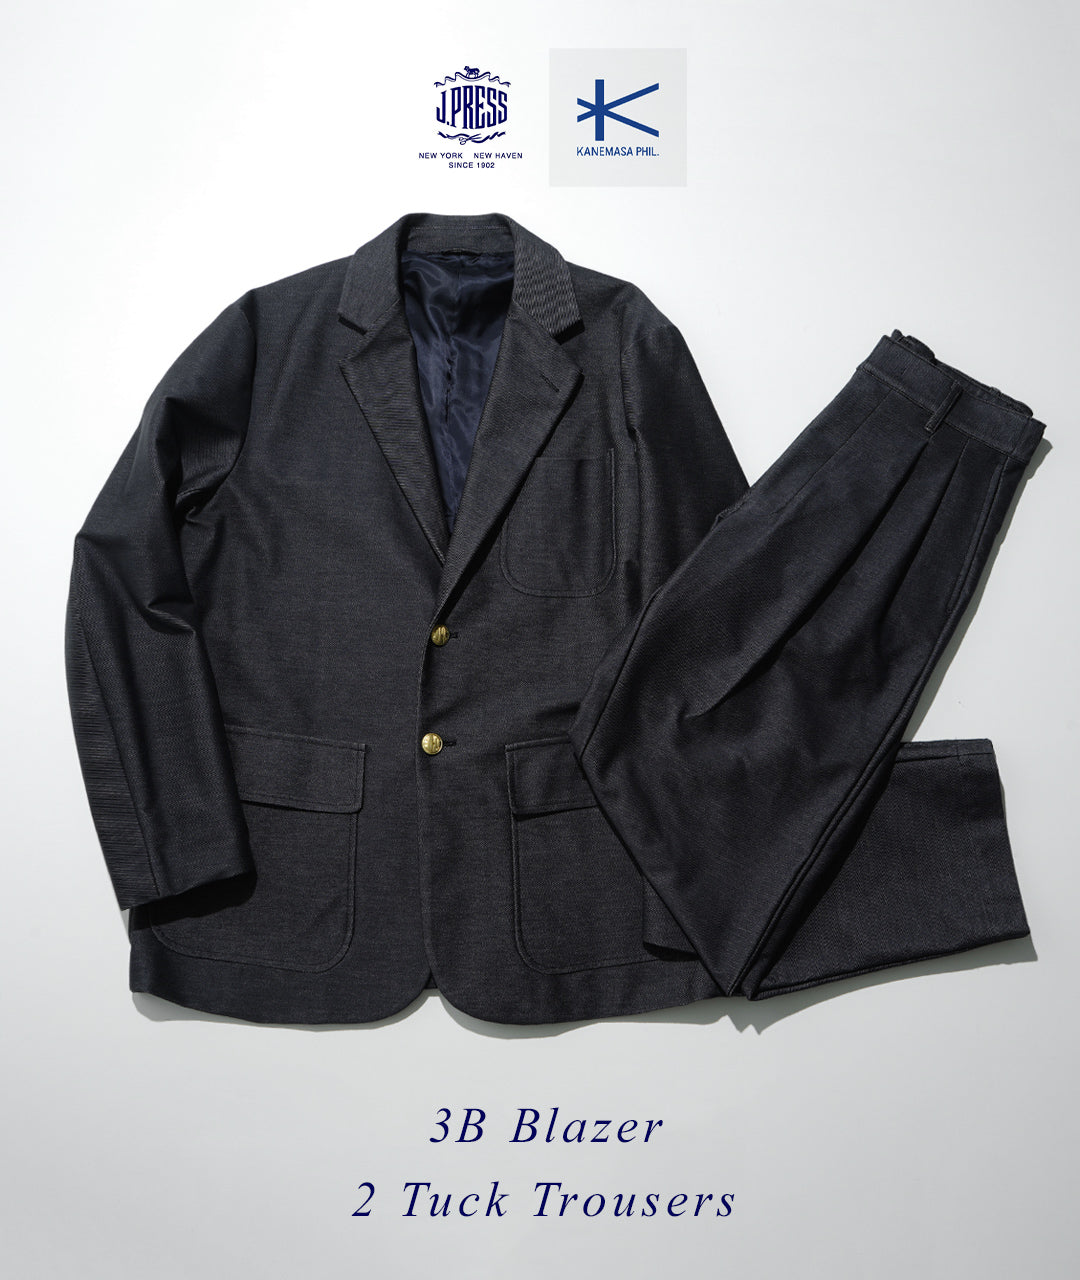 J.PRESS Jプレス × KANEMASA カネマサ 3B ブレザー 3B BLAZER シングル ジャケット BZOASA0070